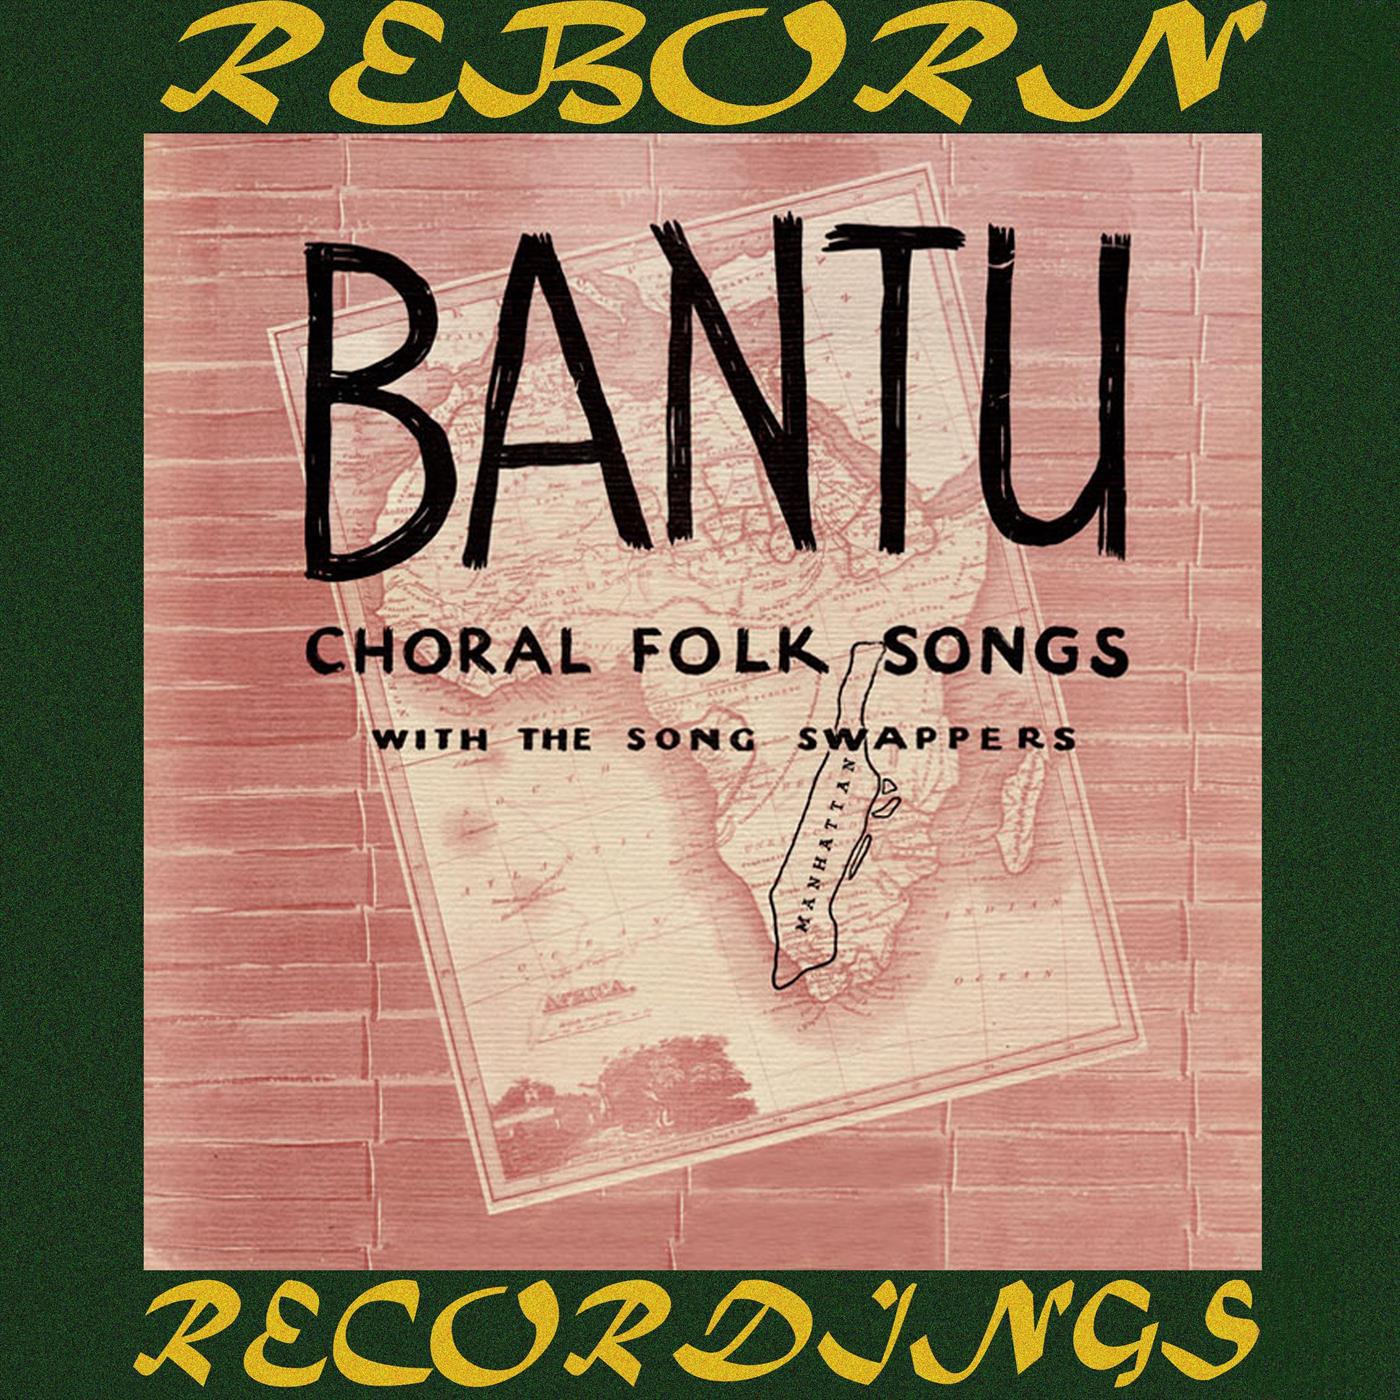 Bantu Choral And Folk Songs (HD Remastered)